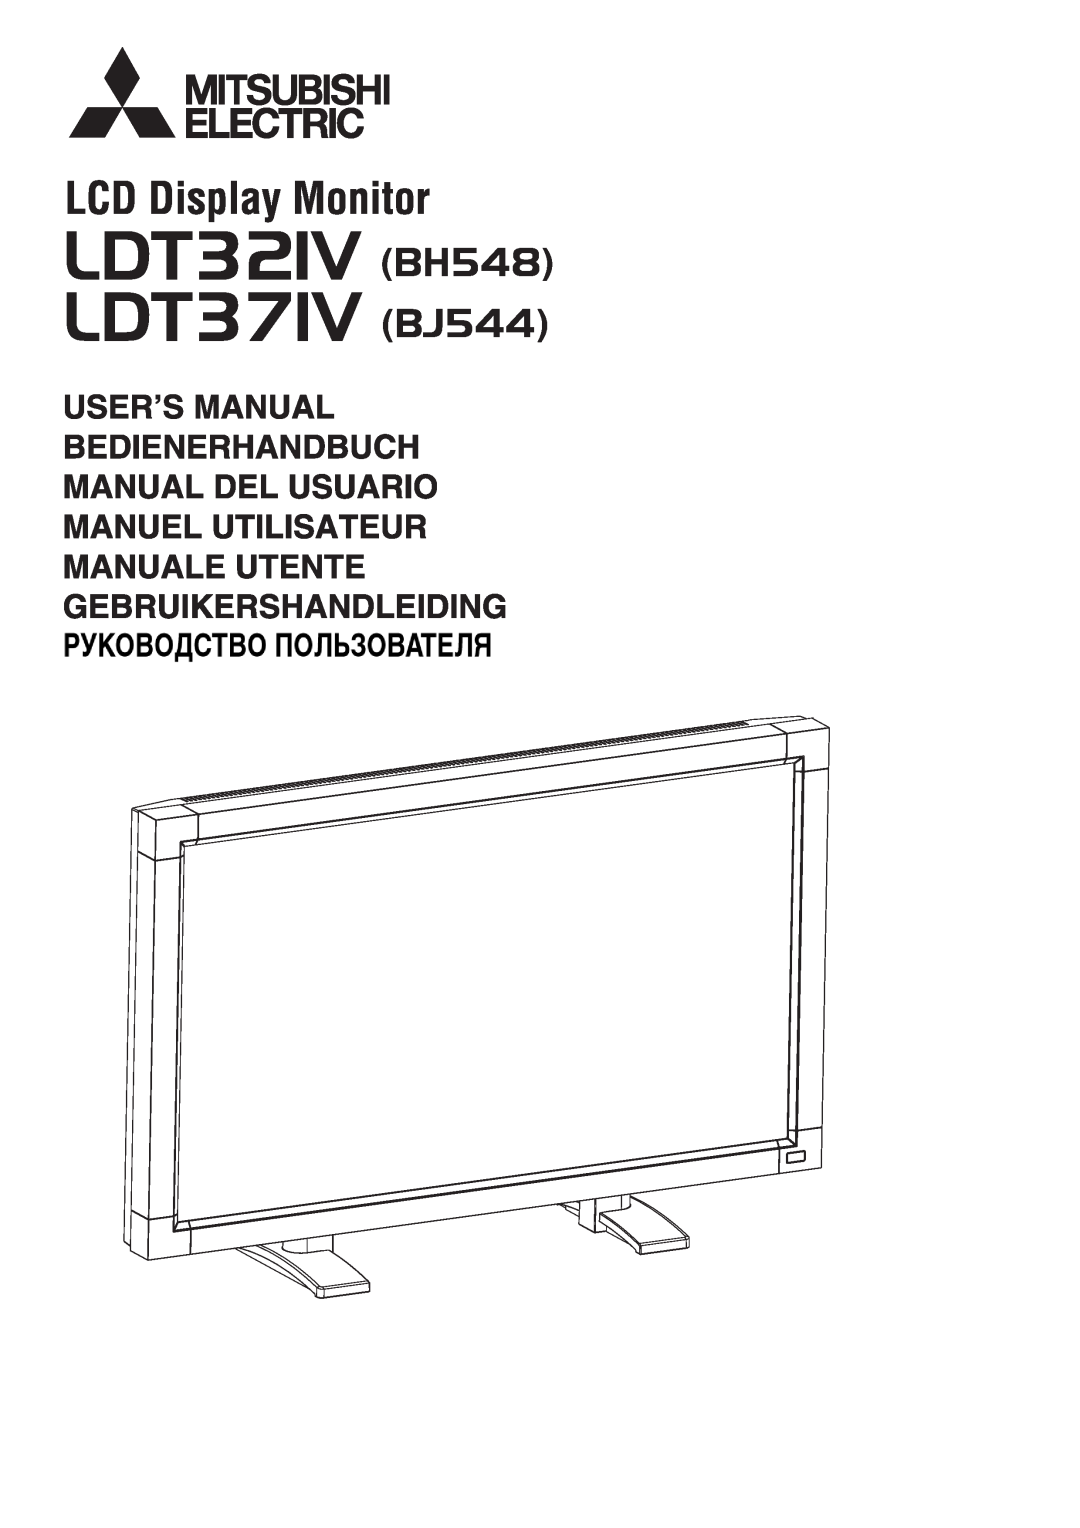 Mitsubishi Electronics LDT32IV (BH548), LDT37IV (BH544) manual 